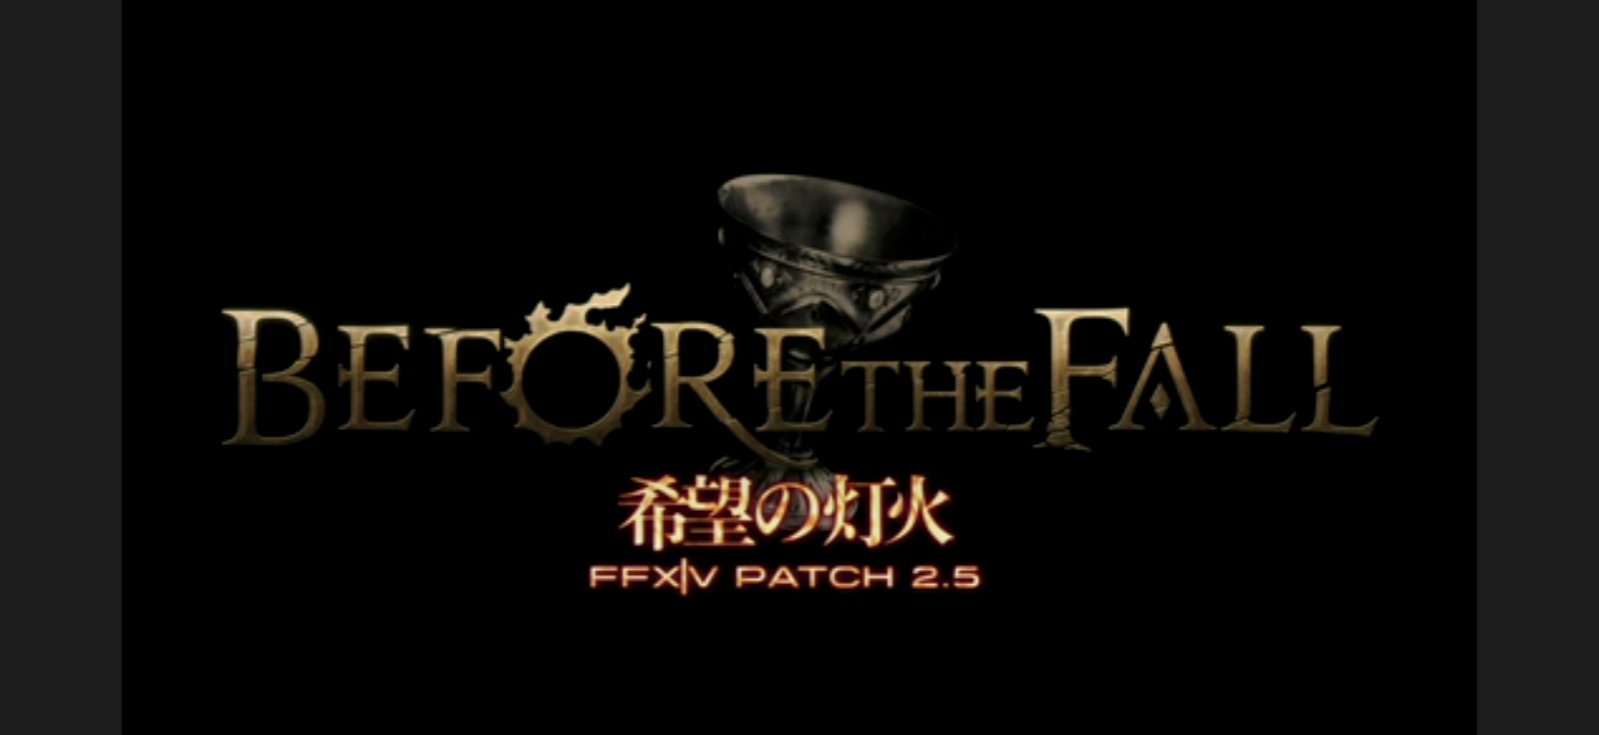 Patch 2.5 Trailer Released-ffxivarr25logo-jpg